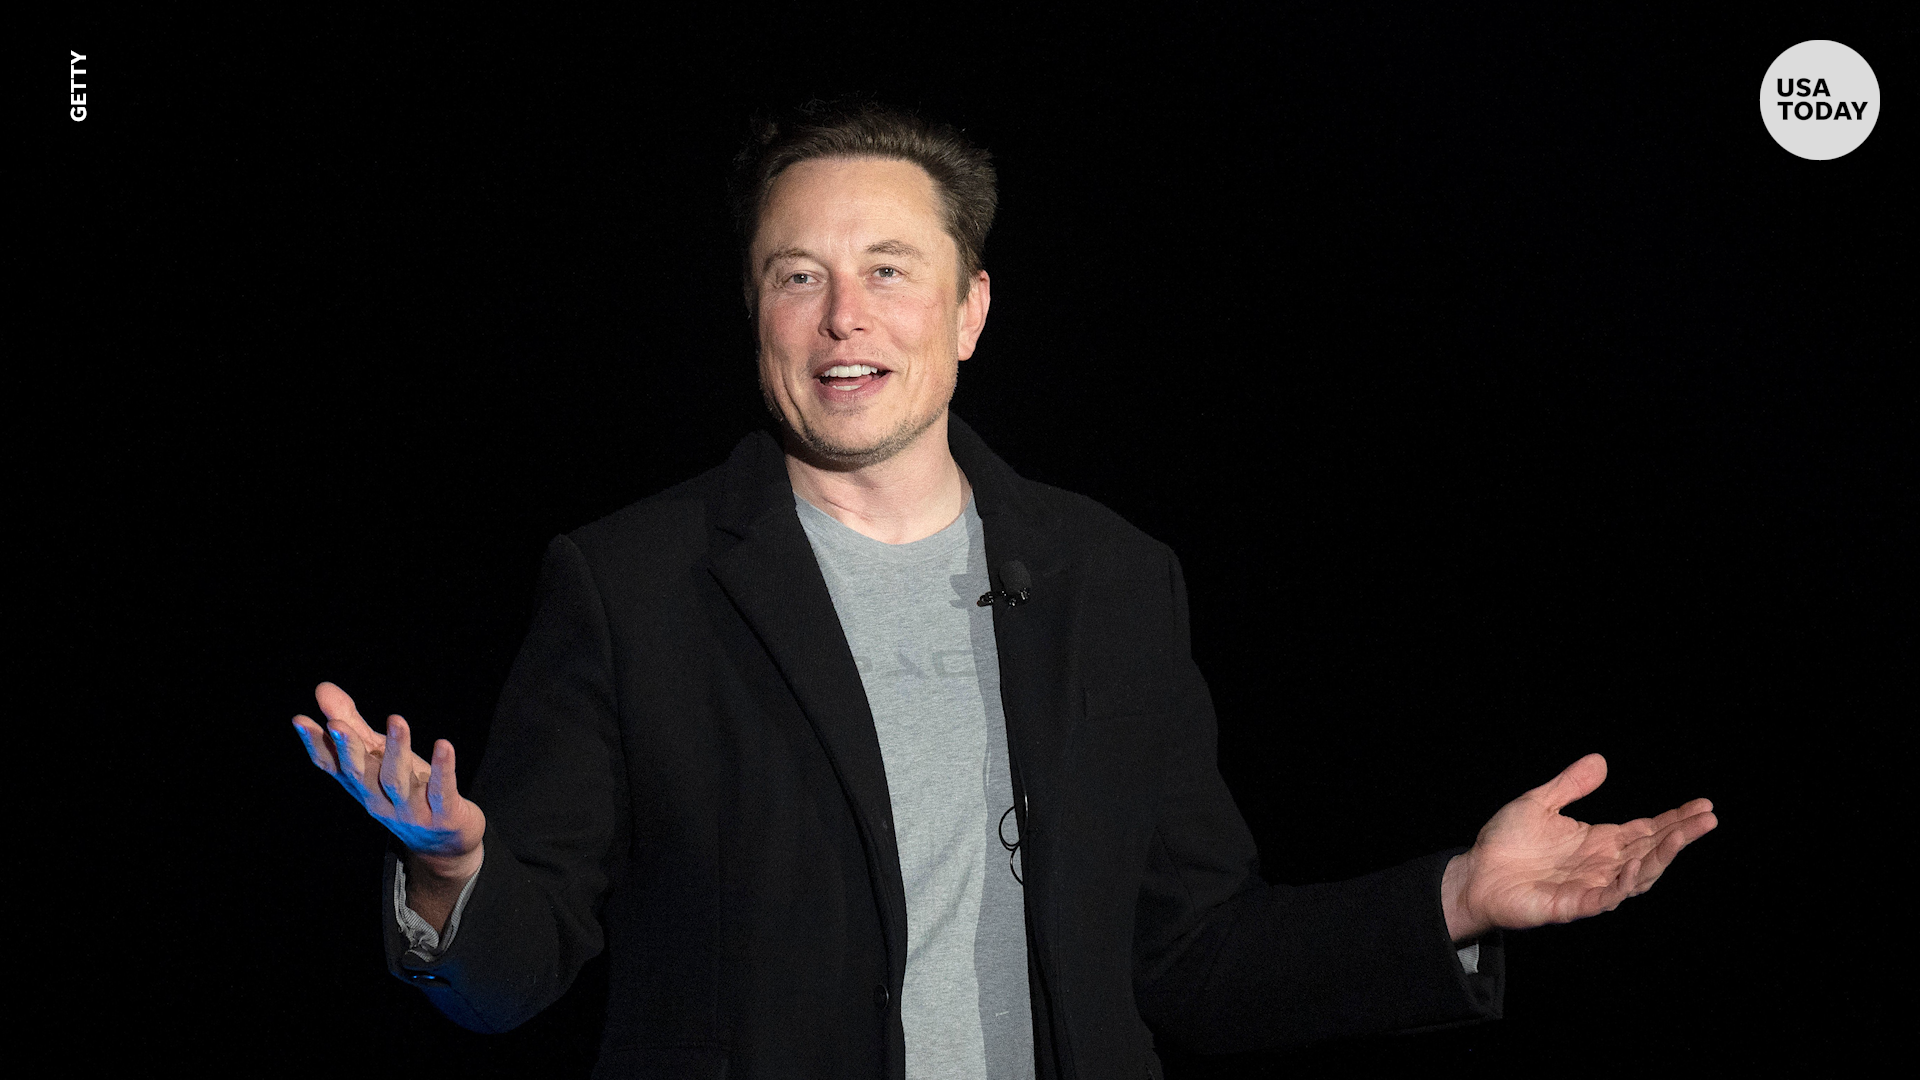 Elon Musk's 18-year-old daughter granted name, gender change in California